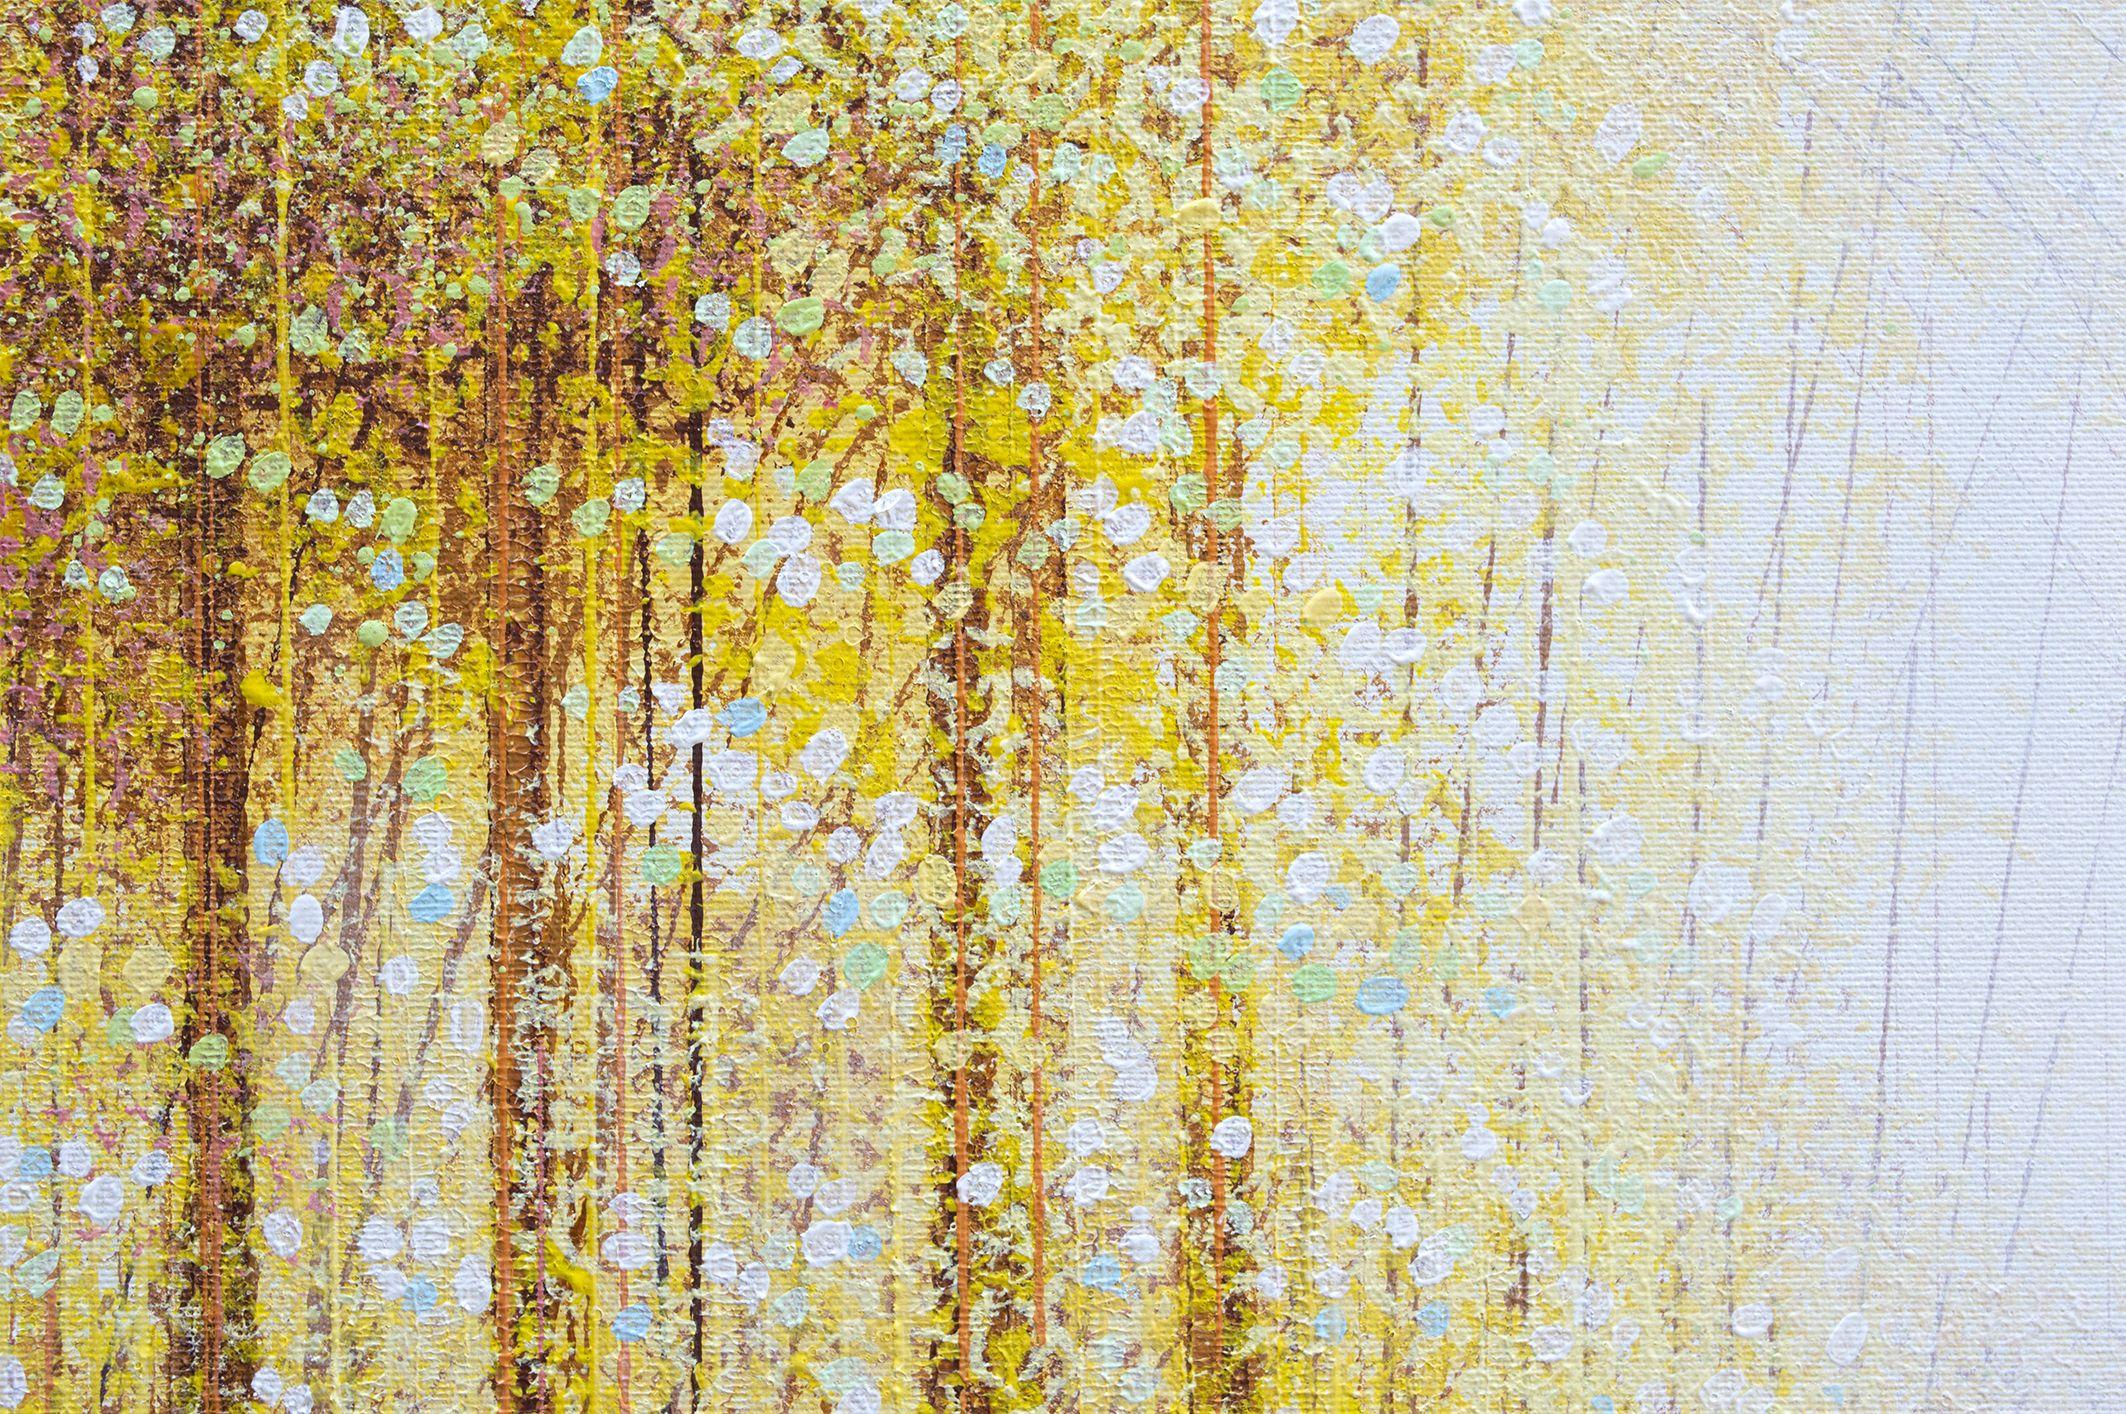 Autumn Trees In Golden Light, Painting, Acrylic on Canvas 1